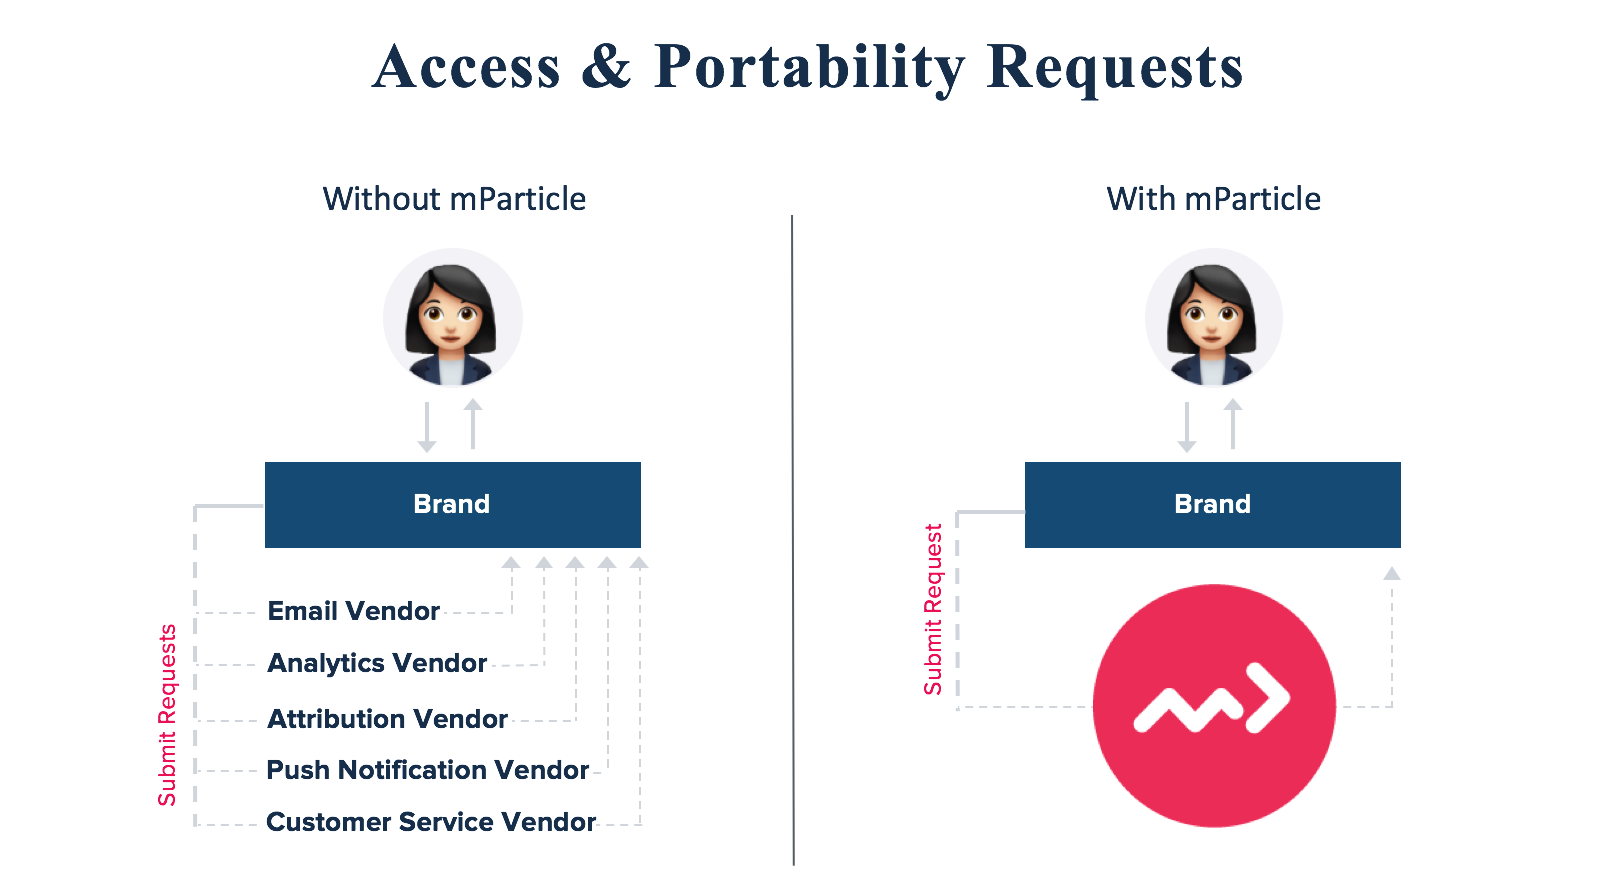 Access & Portability